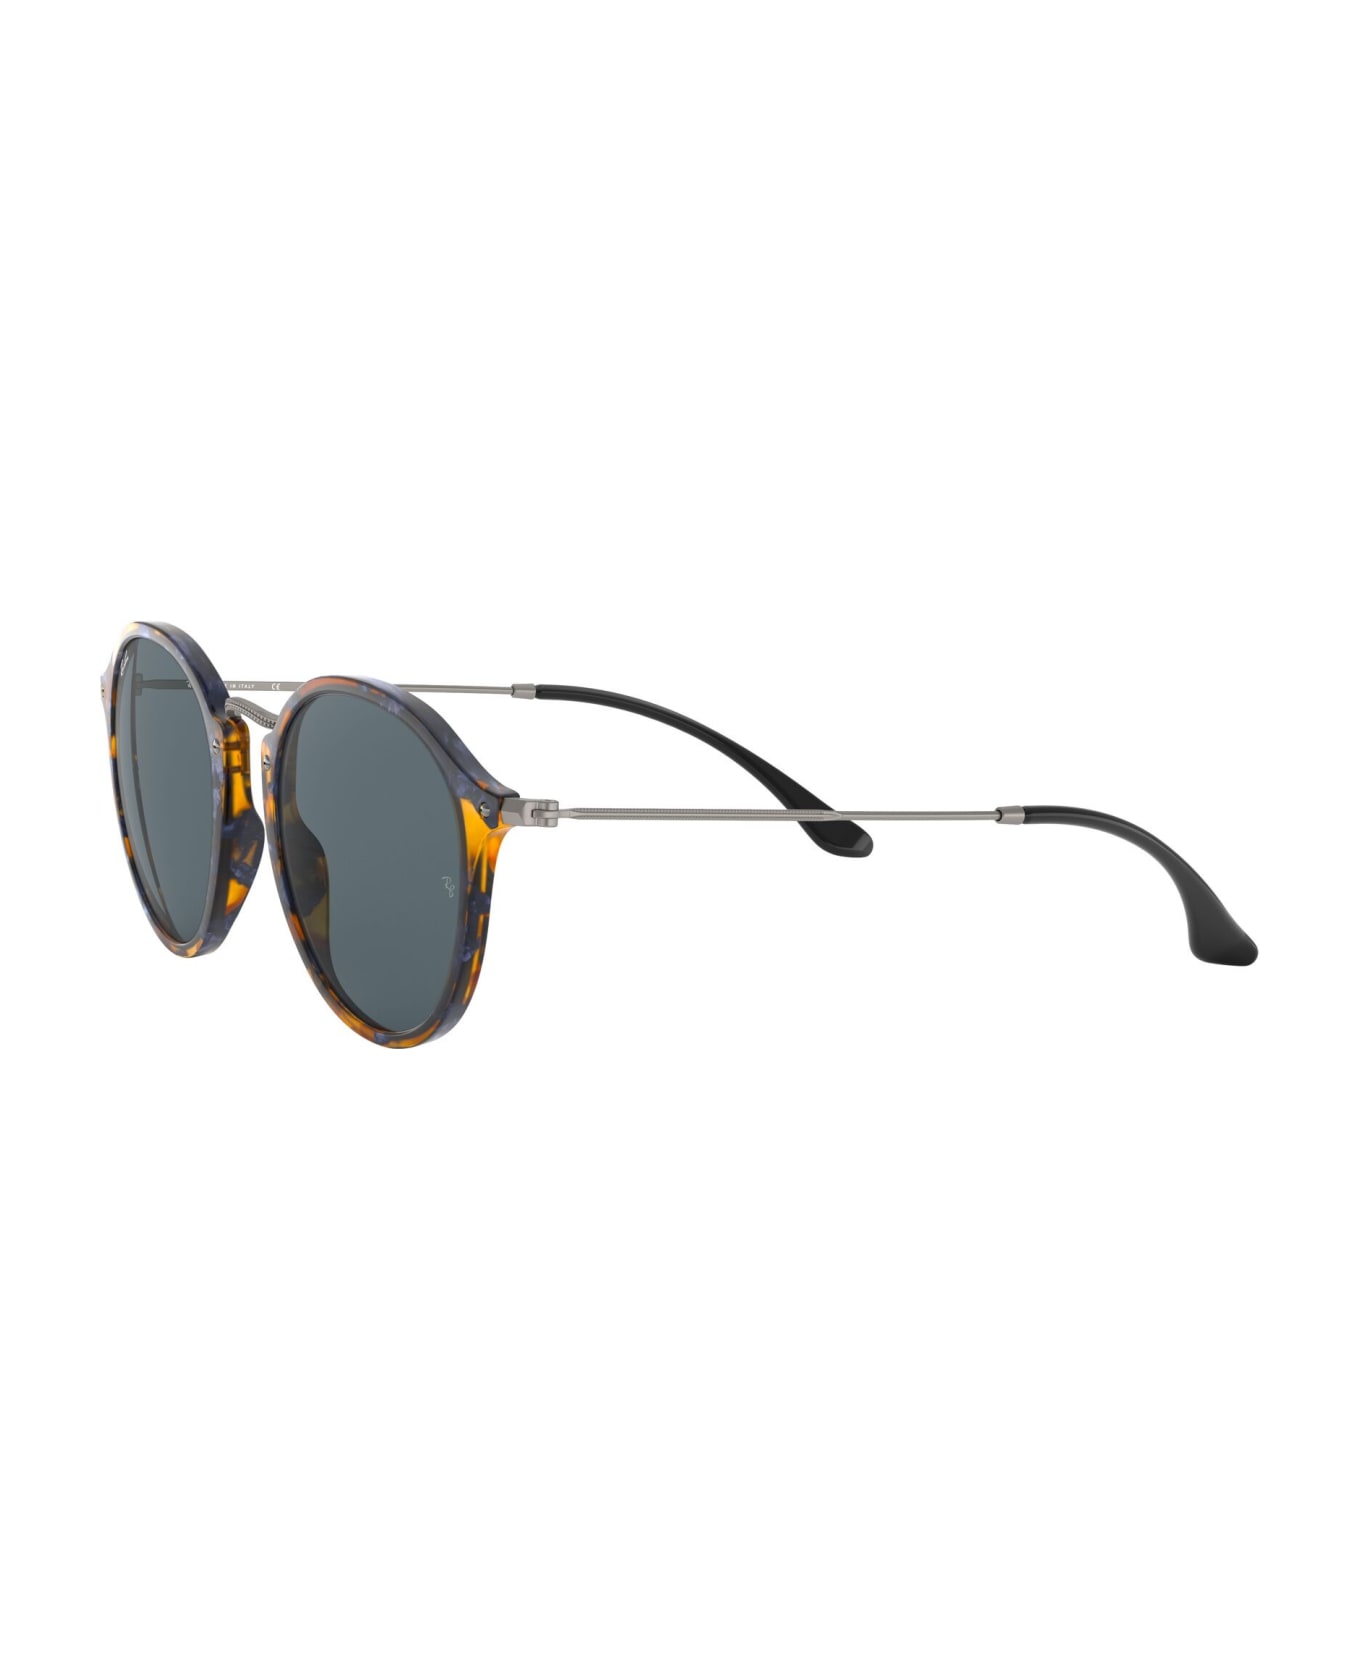 Ray-Ban Sunglasses サングラス